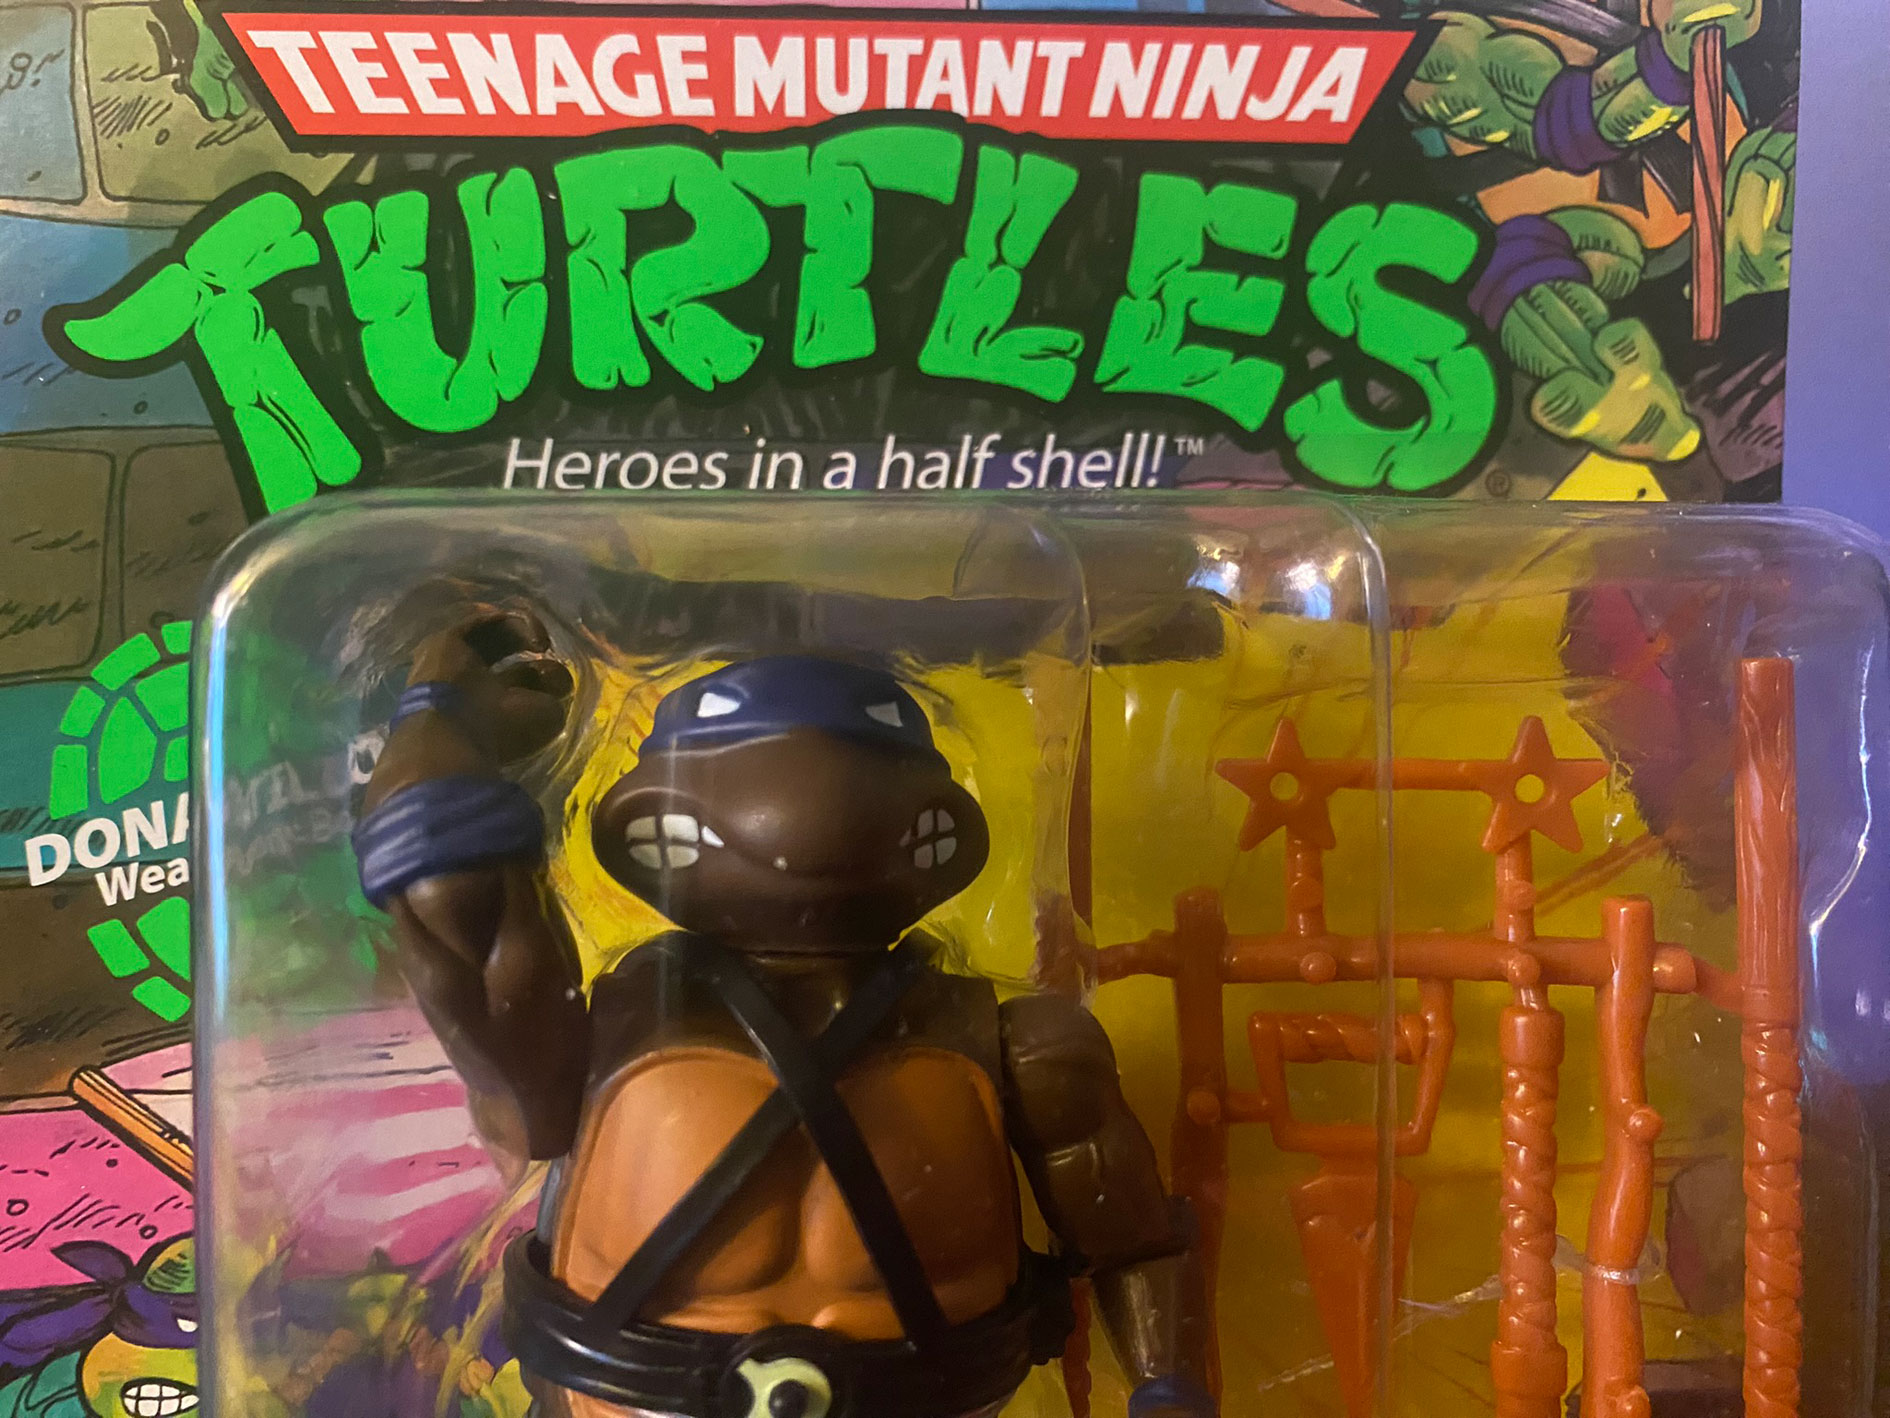 https://xstreamed.tv/wp-content/uploads/2022/12/Teenage-Mutant-Ninja-Turtles-Playmates-Donatello-Figure.jpg